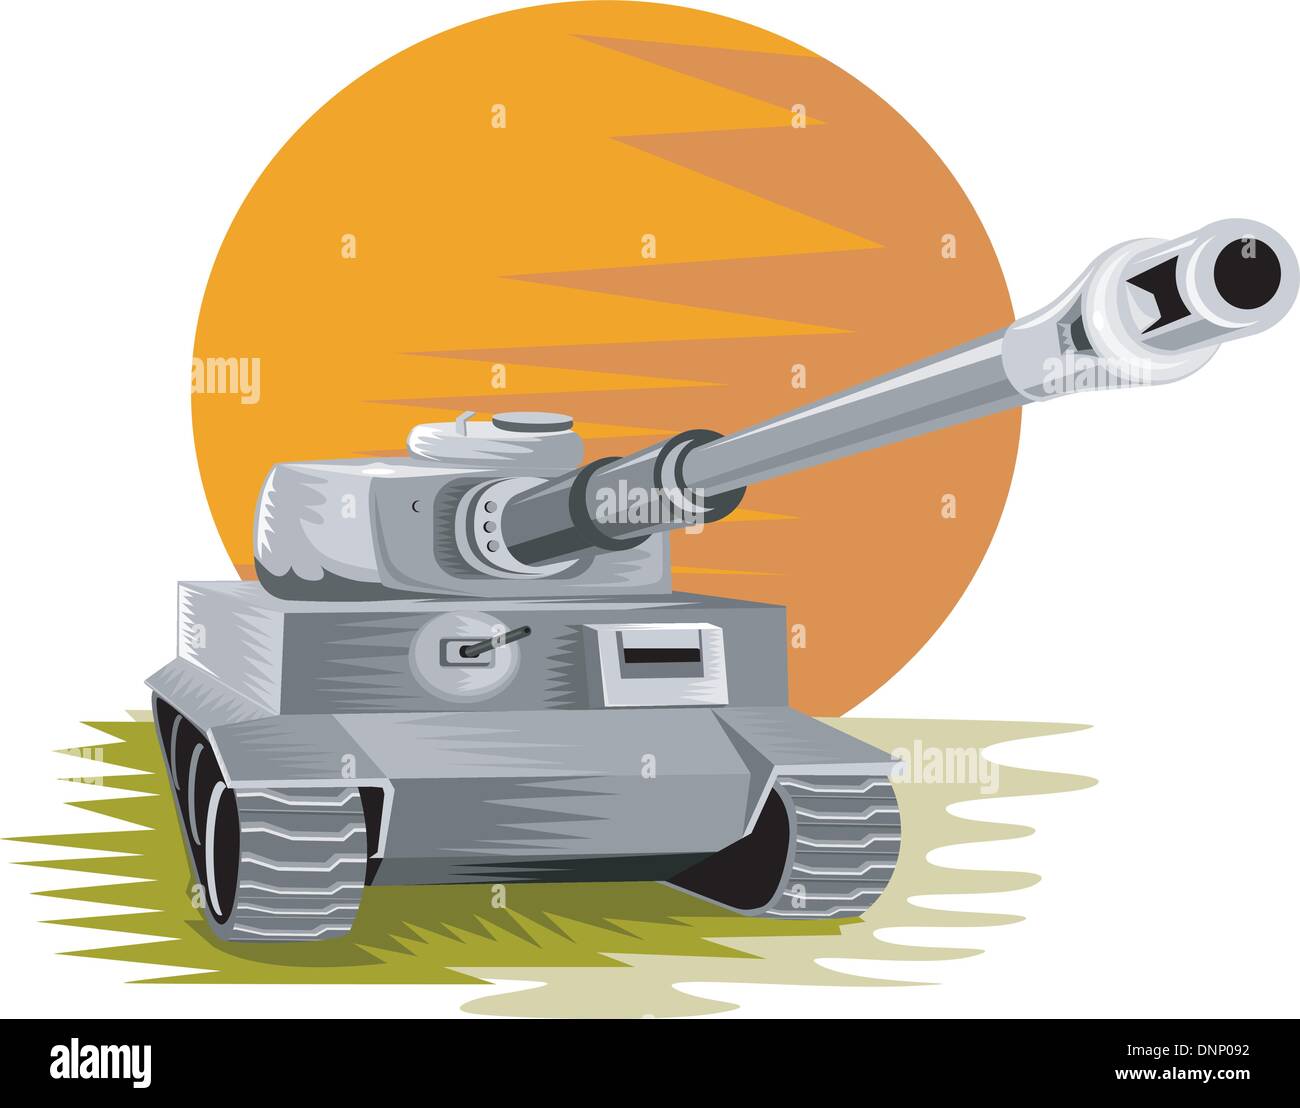 Tank Vector Illustration, Vectors